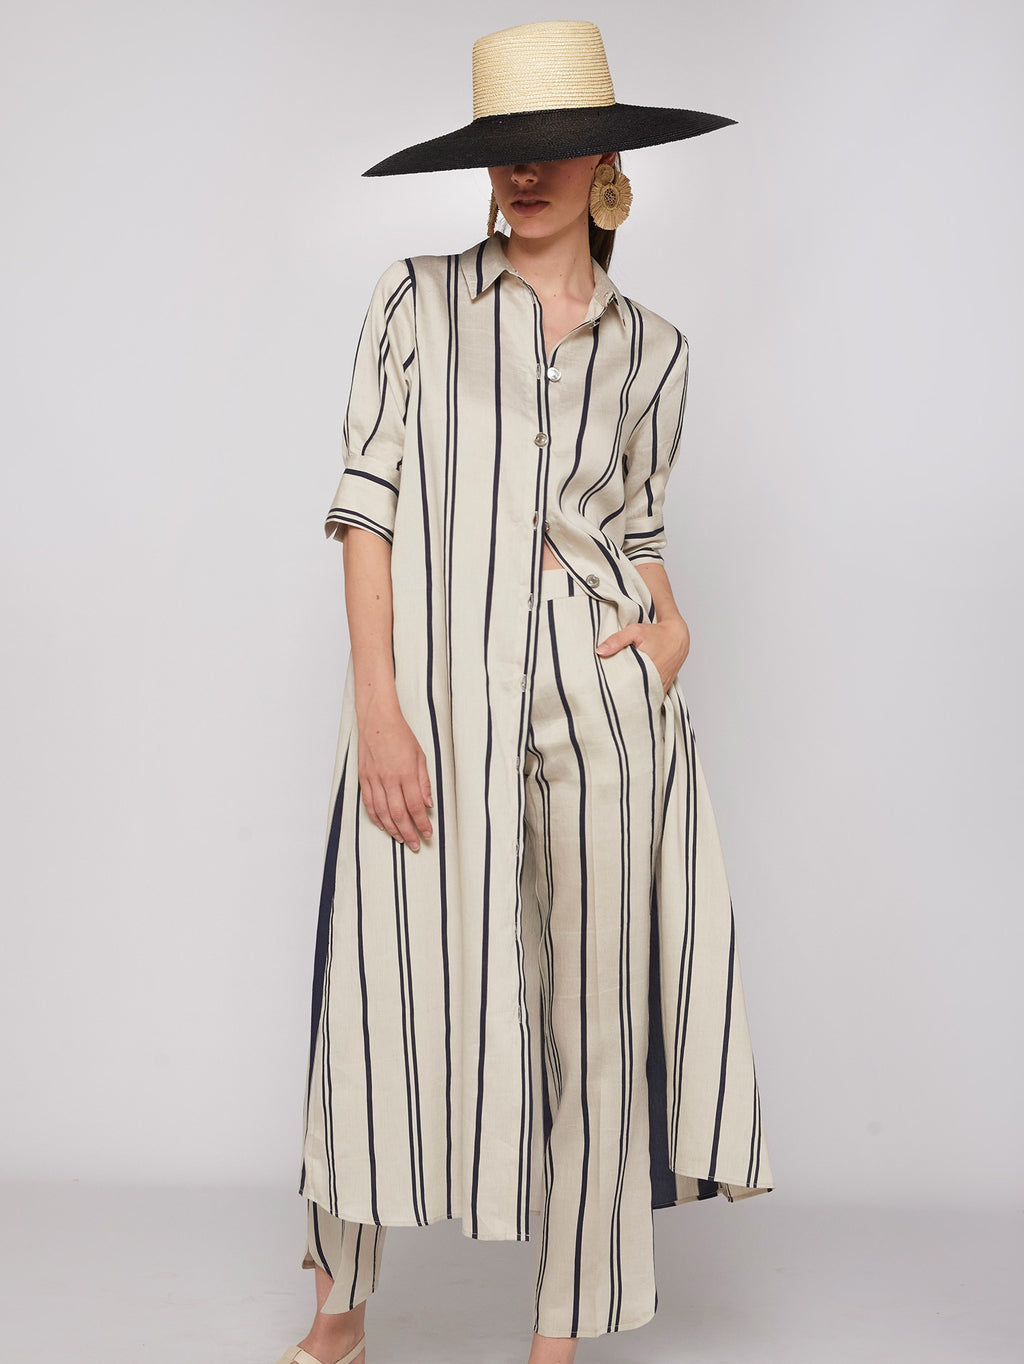 Izzy Elba Stripes Dress by Vilagallo